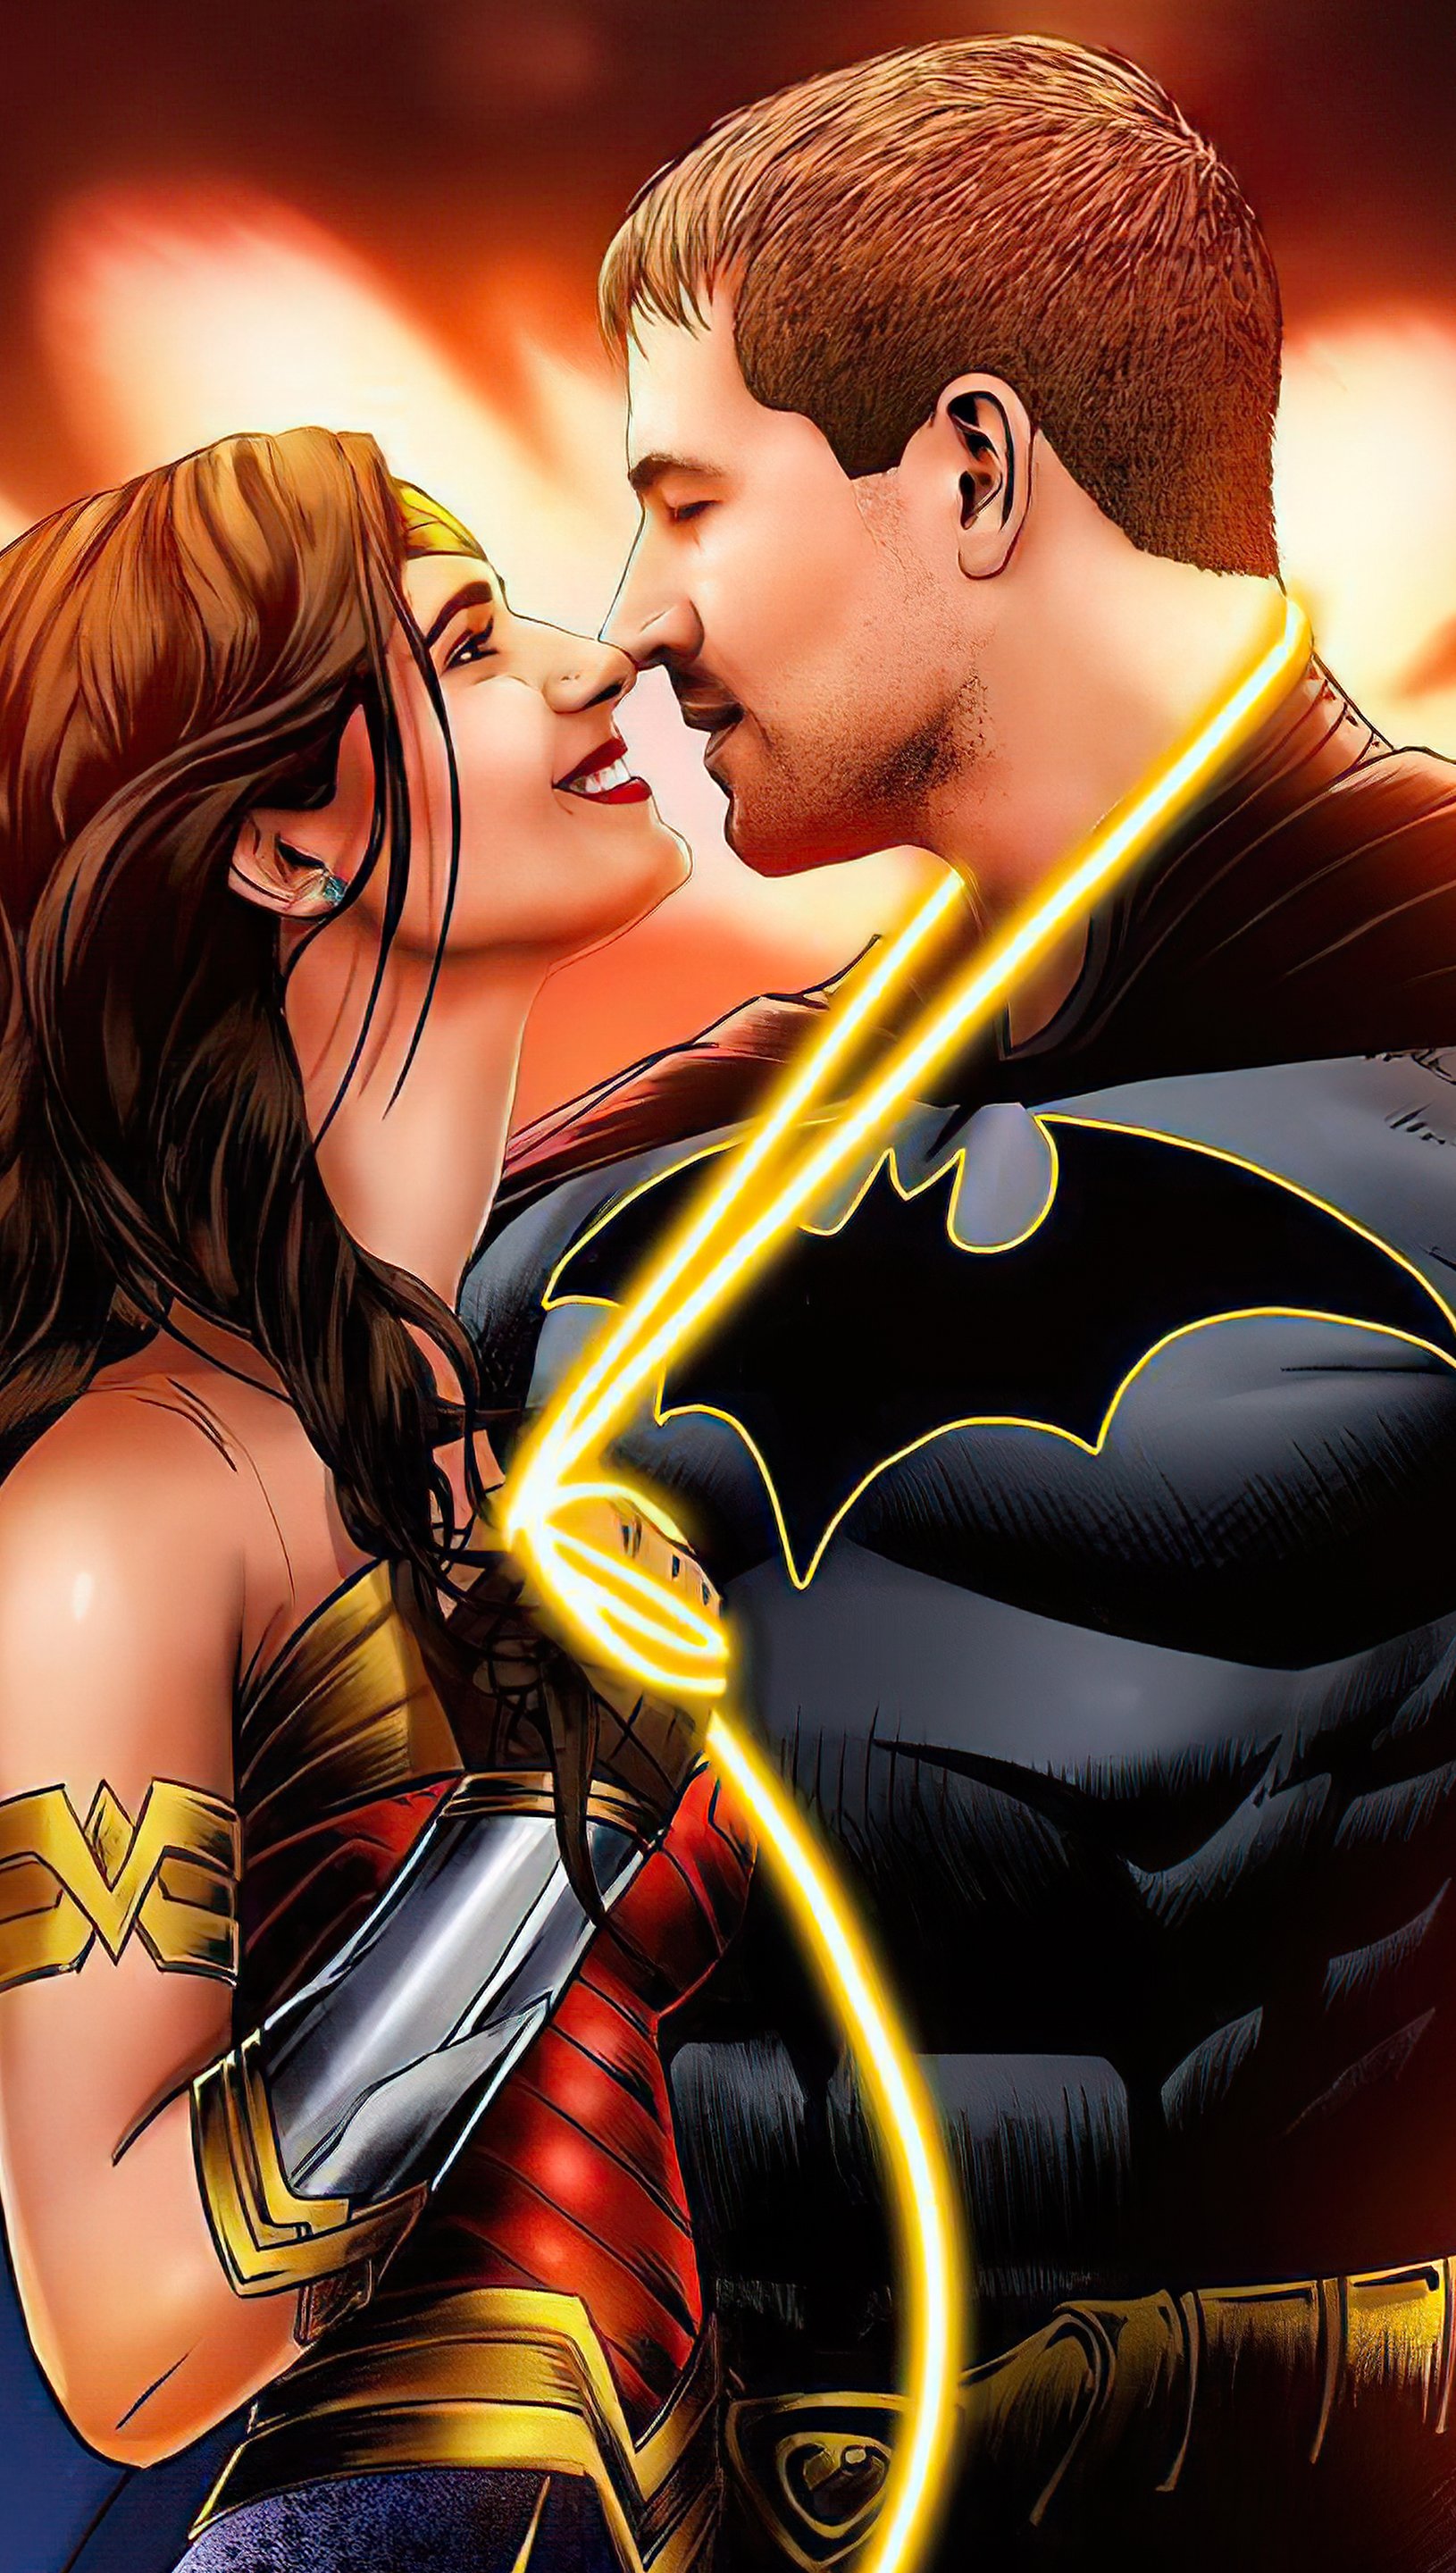 Batman and Wonder Woman in love Wallpaper 5k Ultra HD ID:7611